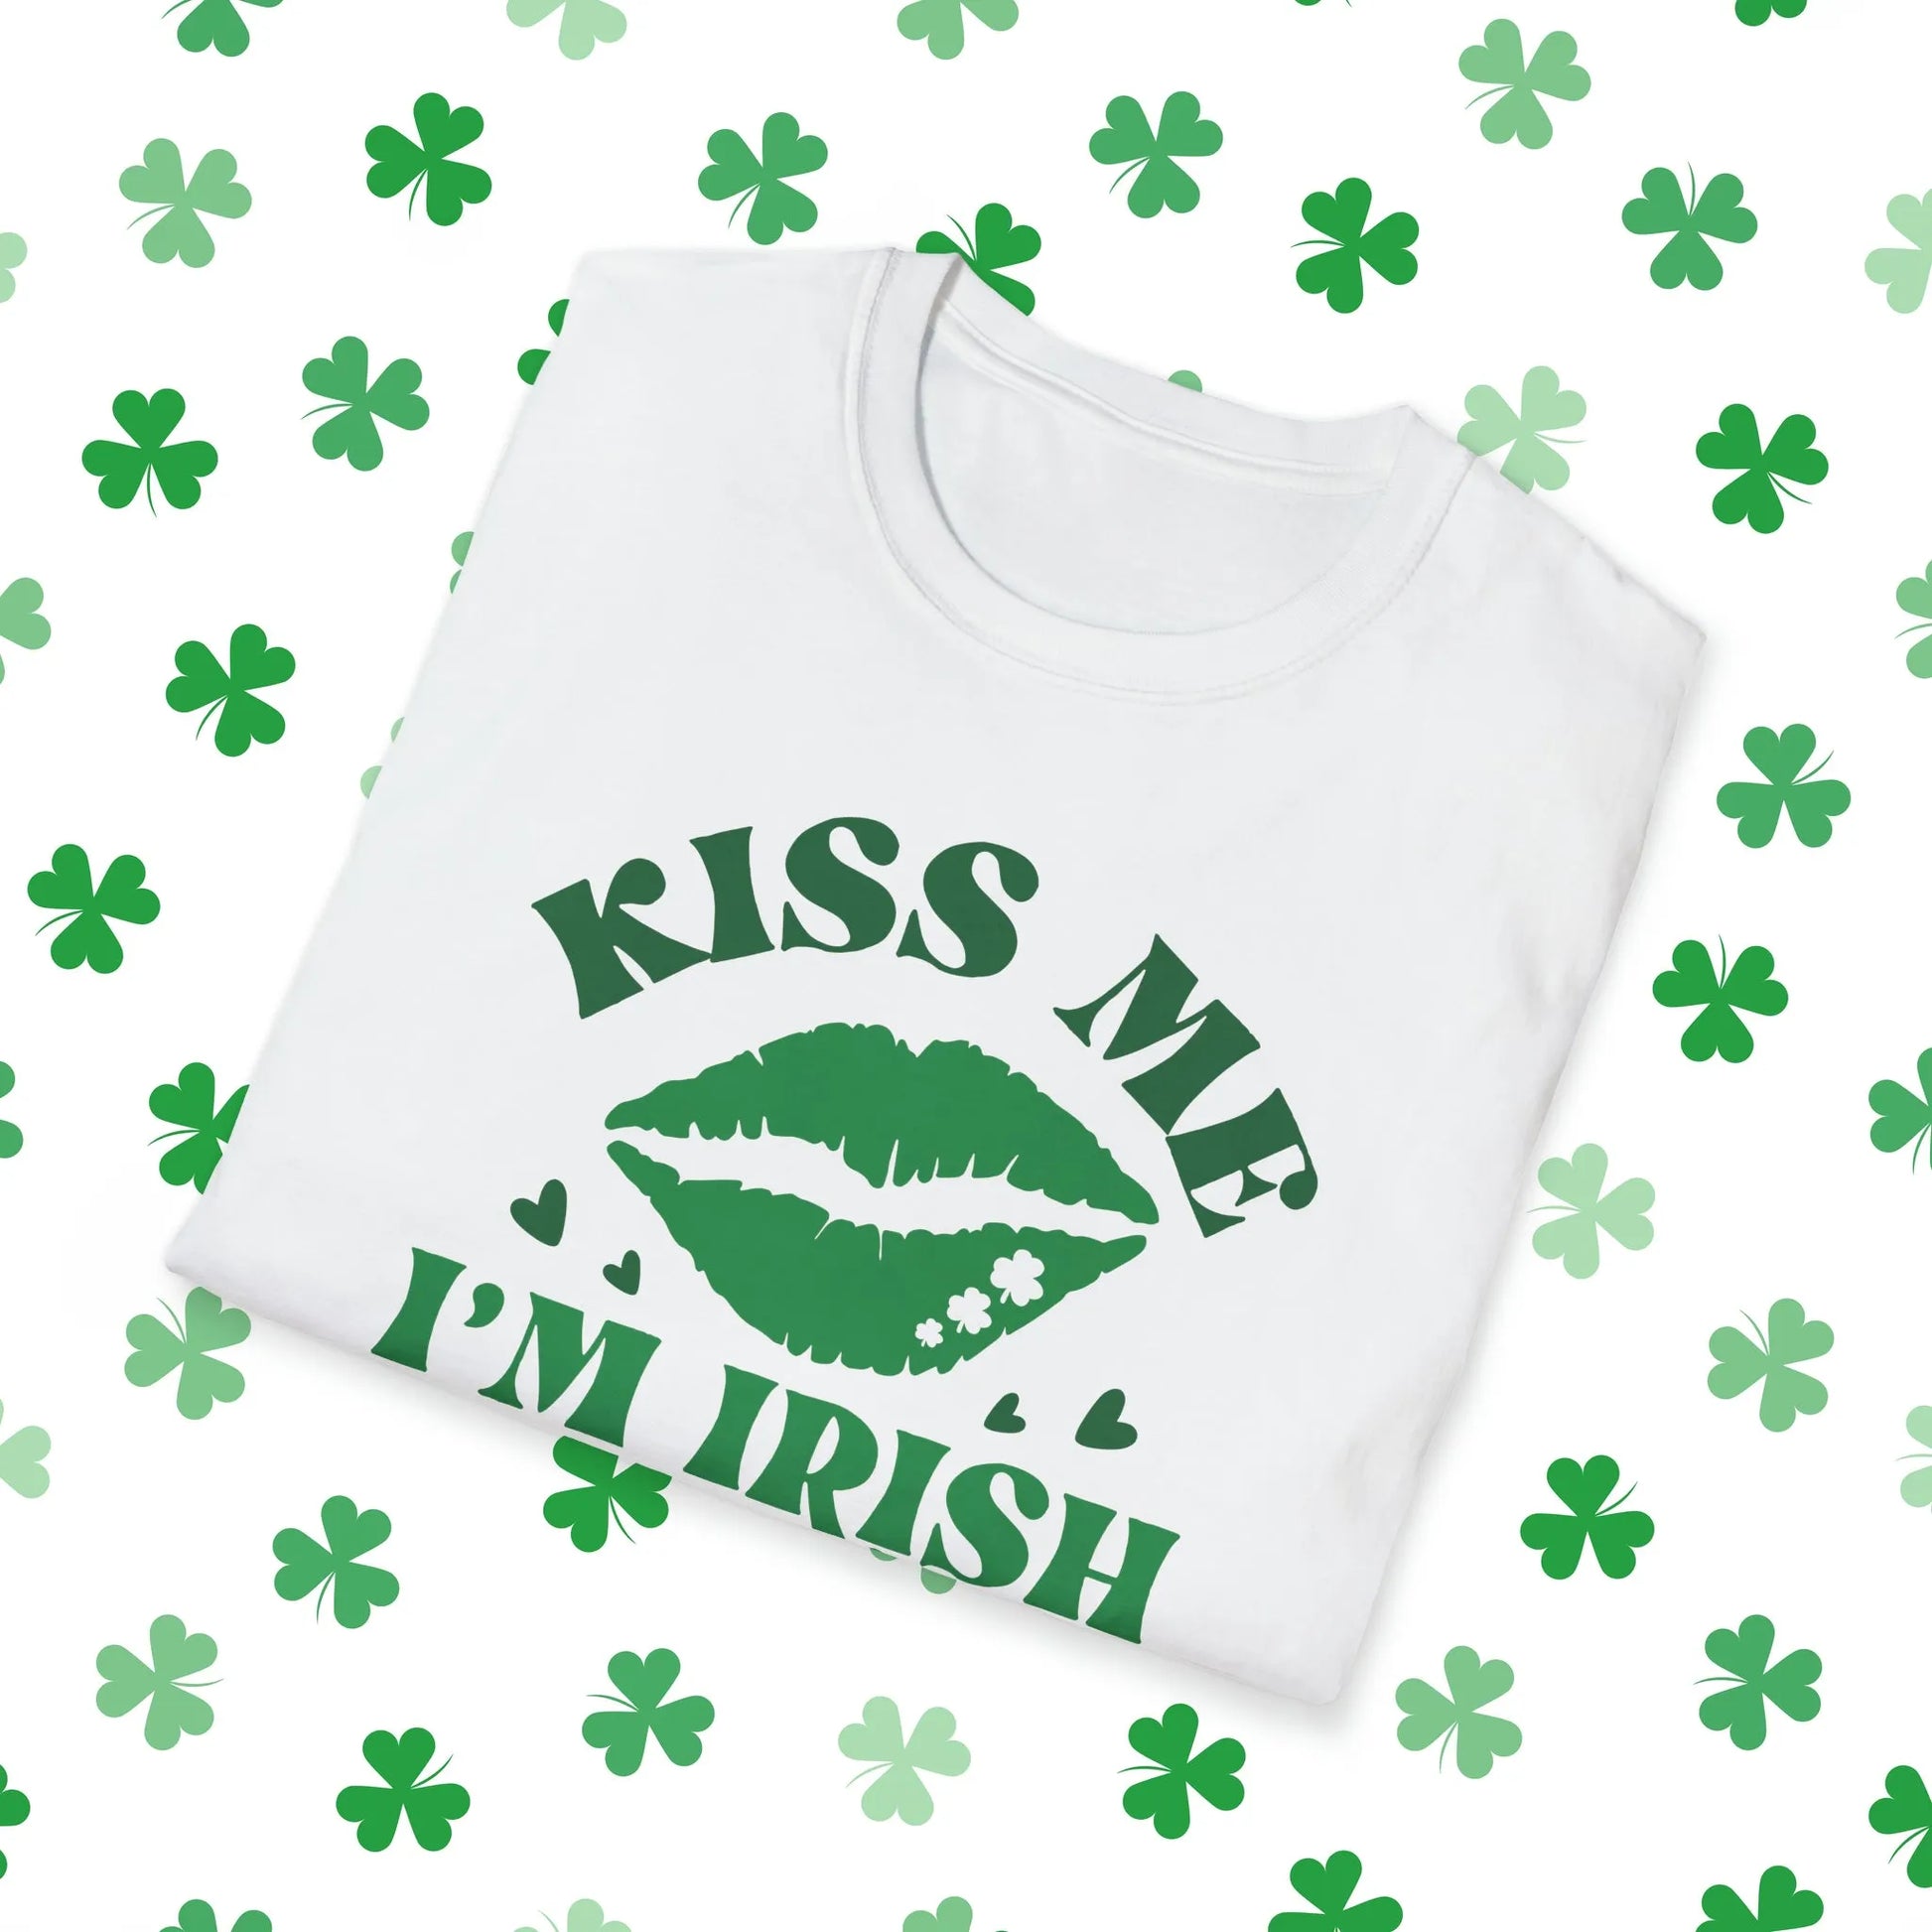 Kiss Me I'm Irish Retro-Style St. Patrick's Day T-Shirt - Comfort & Charm - Kiss Me I'm Irish Shirt White Folded